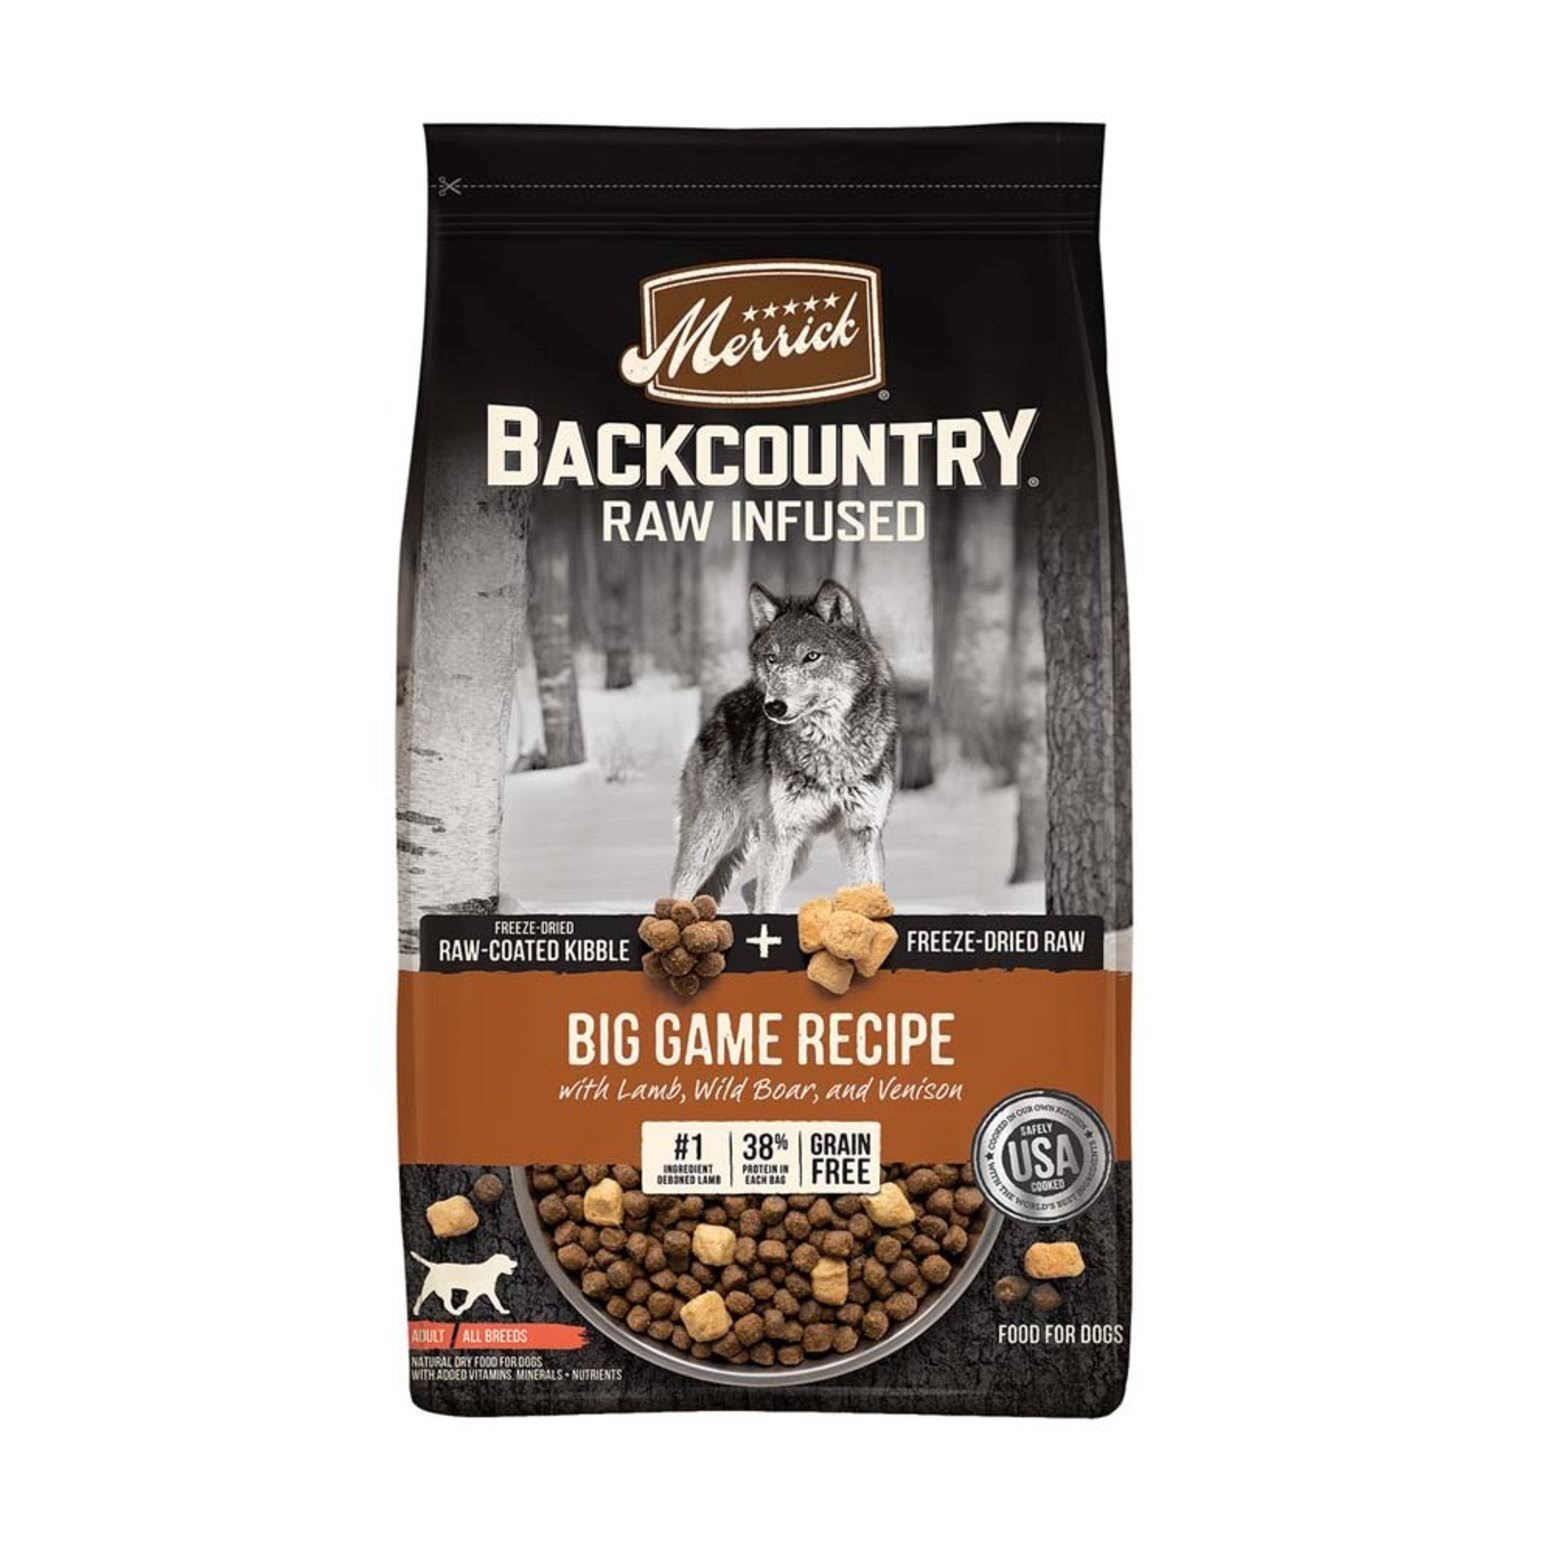 Backcountry - Raw Infused - Big Game Recipe - Dry Dog Food - Merrick